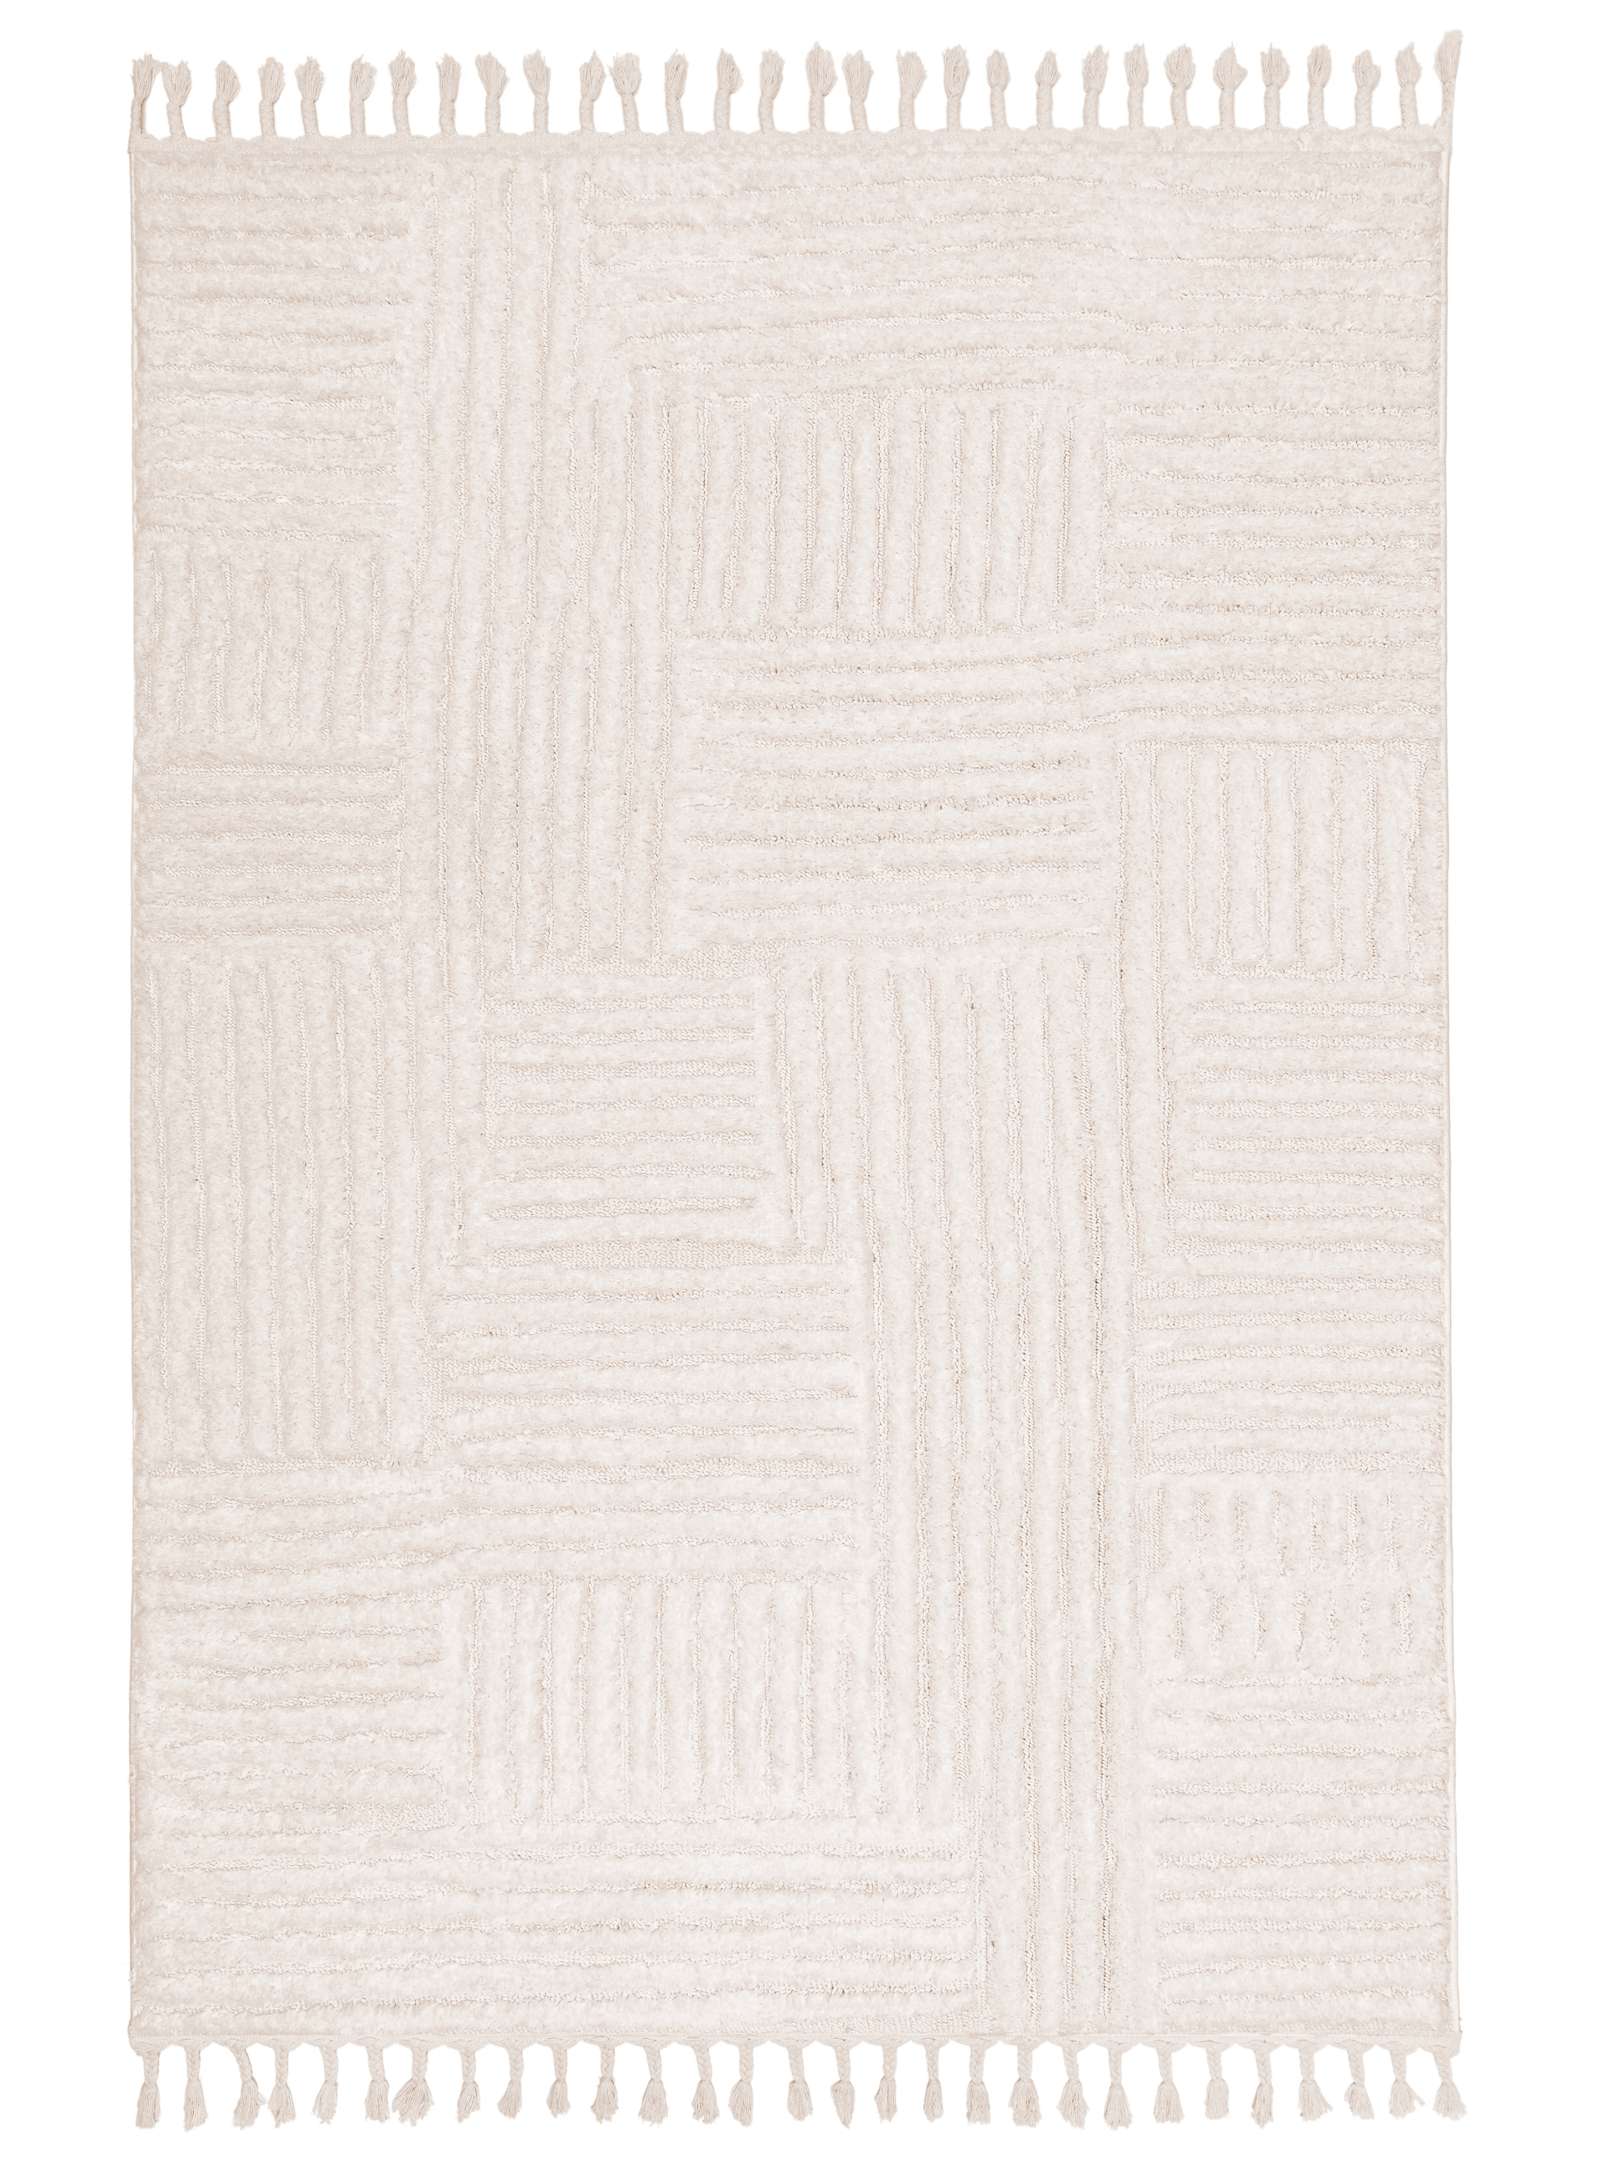 Arbori Ivory Abstract Rug by Loopsie Full View